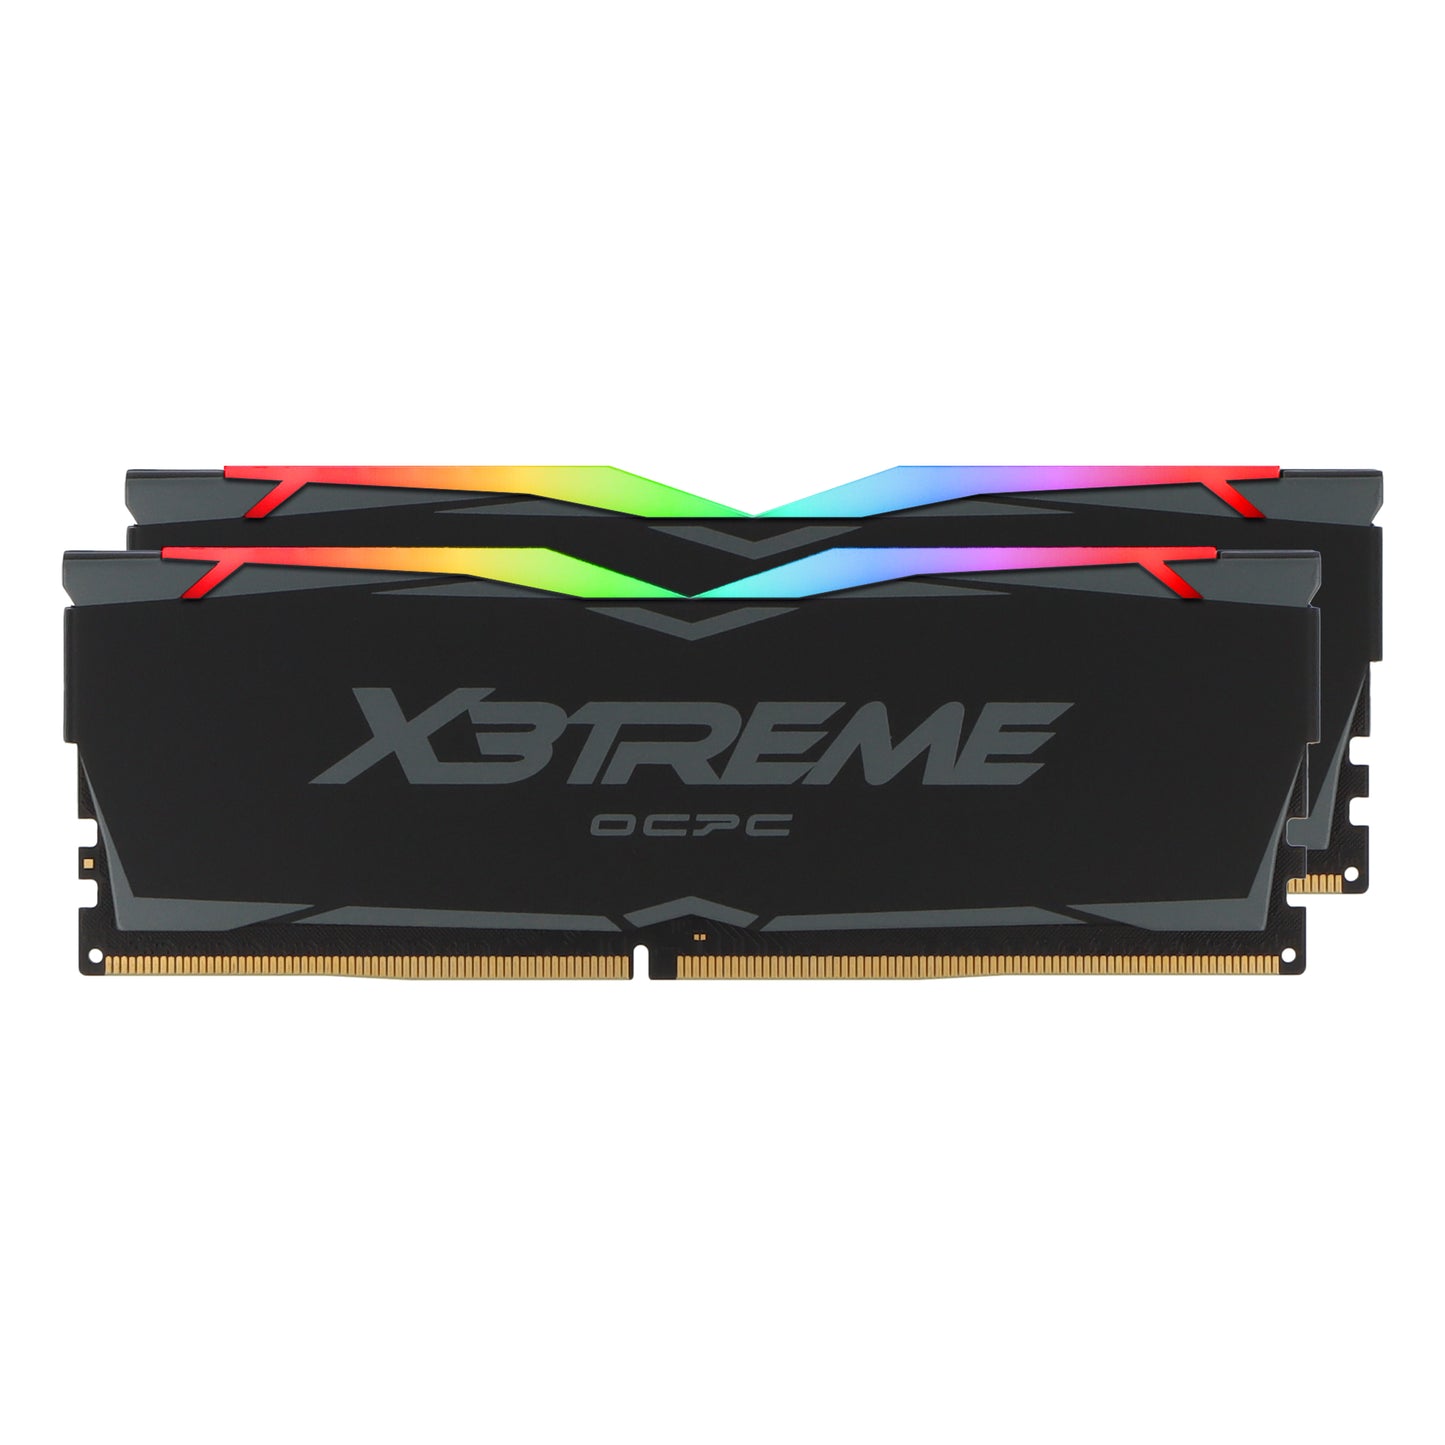 OCPC X3Treme Aura RGB DDR4 16GB (2x8GB) - 3000MHz - CL16 - DIMM- Desktop - Black